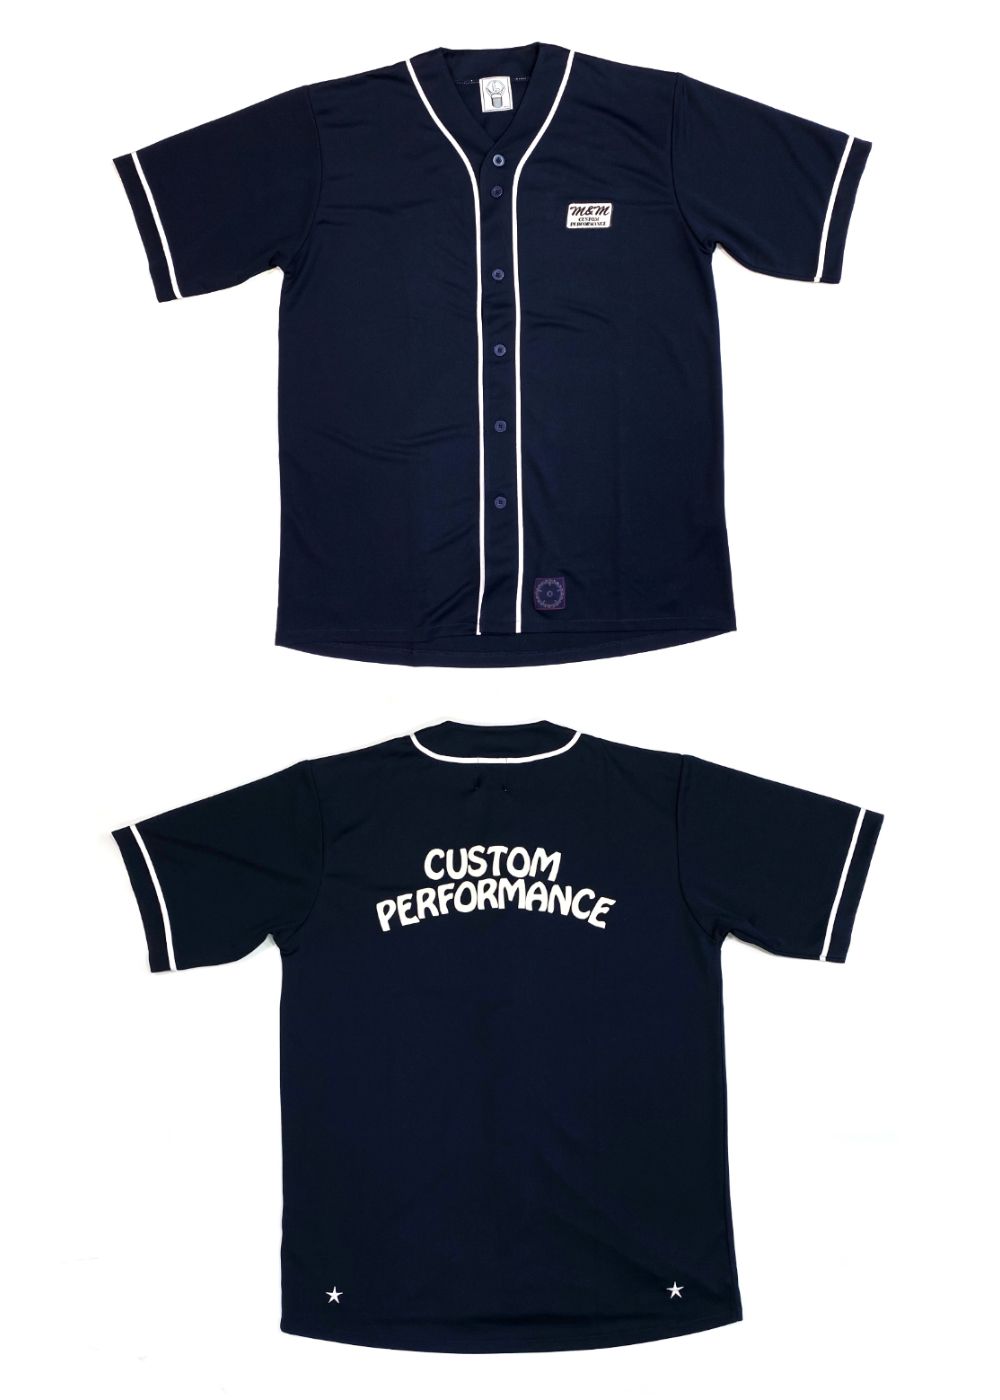 M&M Custom Performance ベースボールシャツ サイズL - トップス